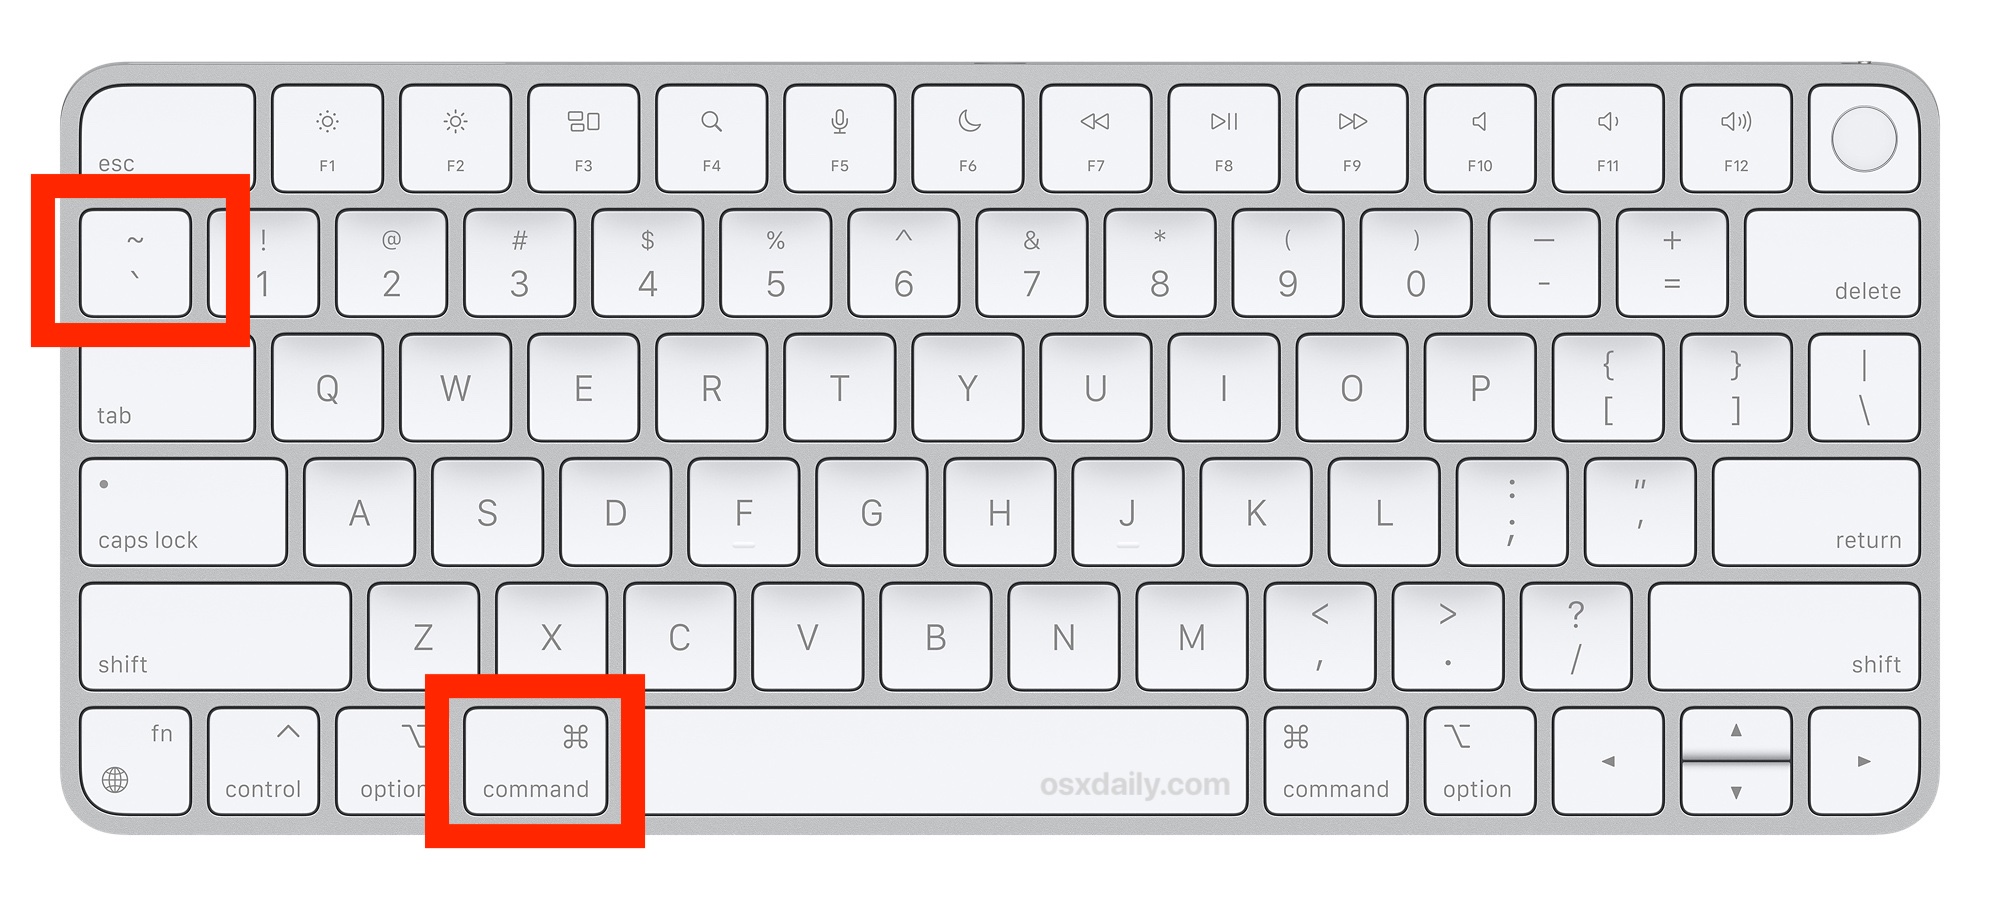 switch safari windows mac shortcut